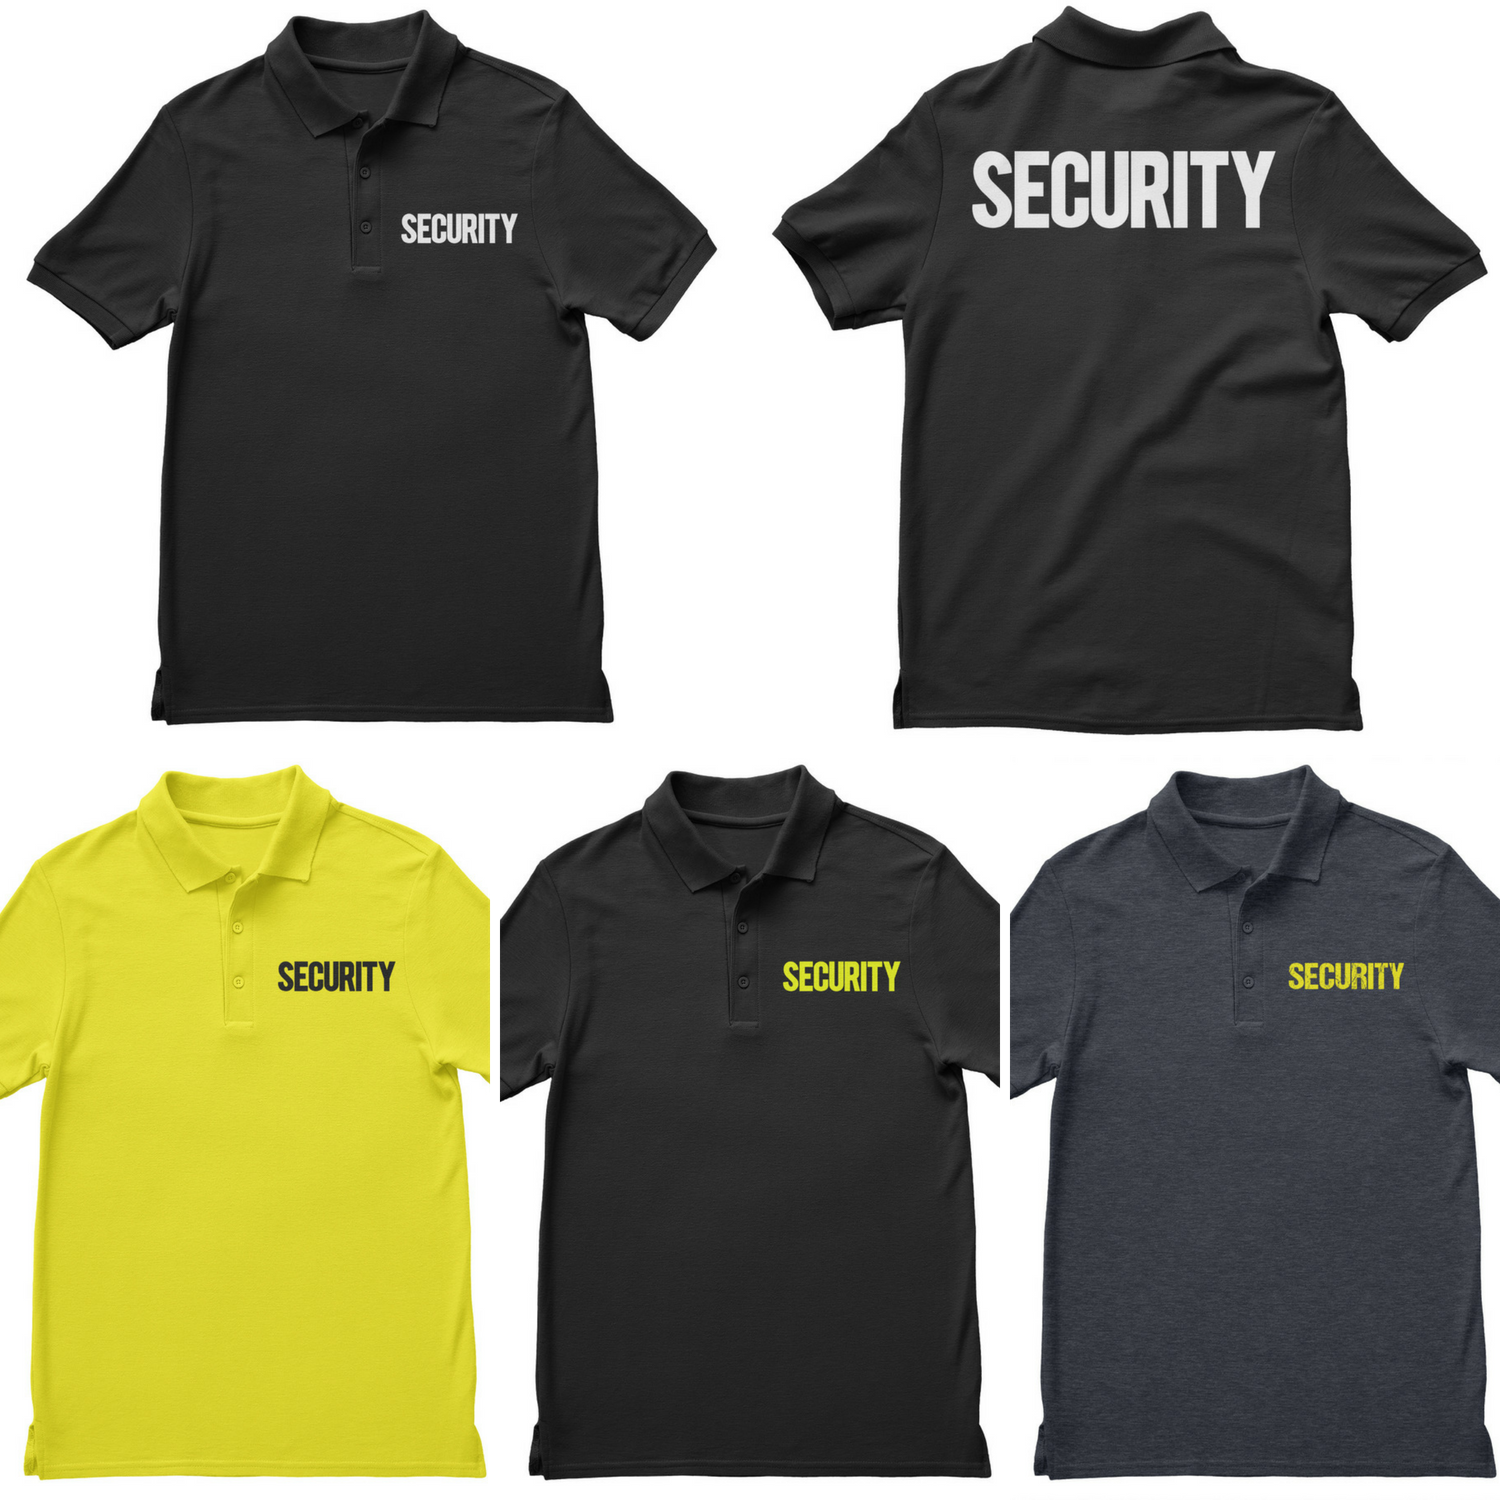 Men's Security Polo Shirt Amazon #1 Bestseller